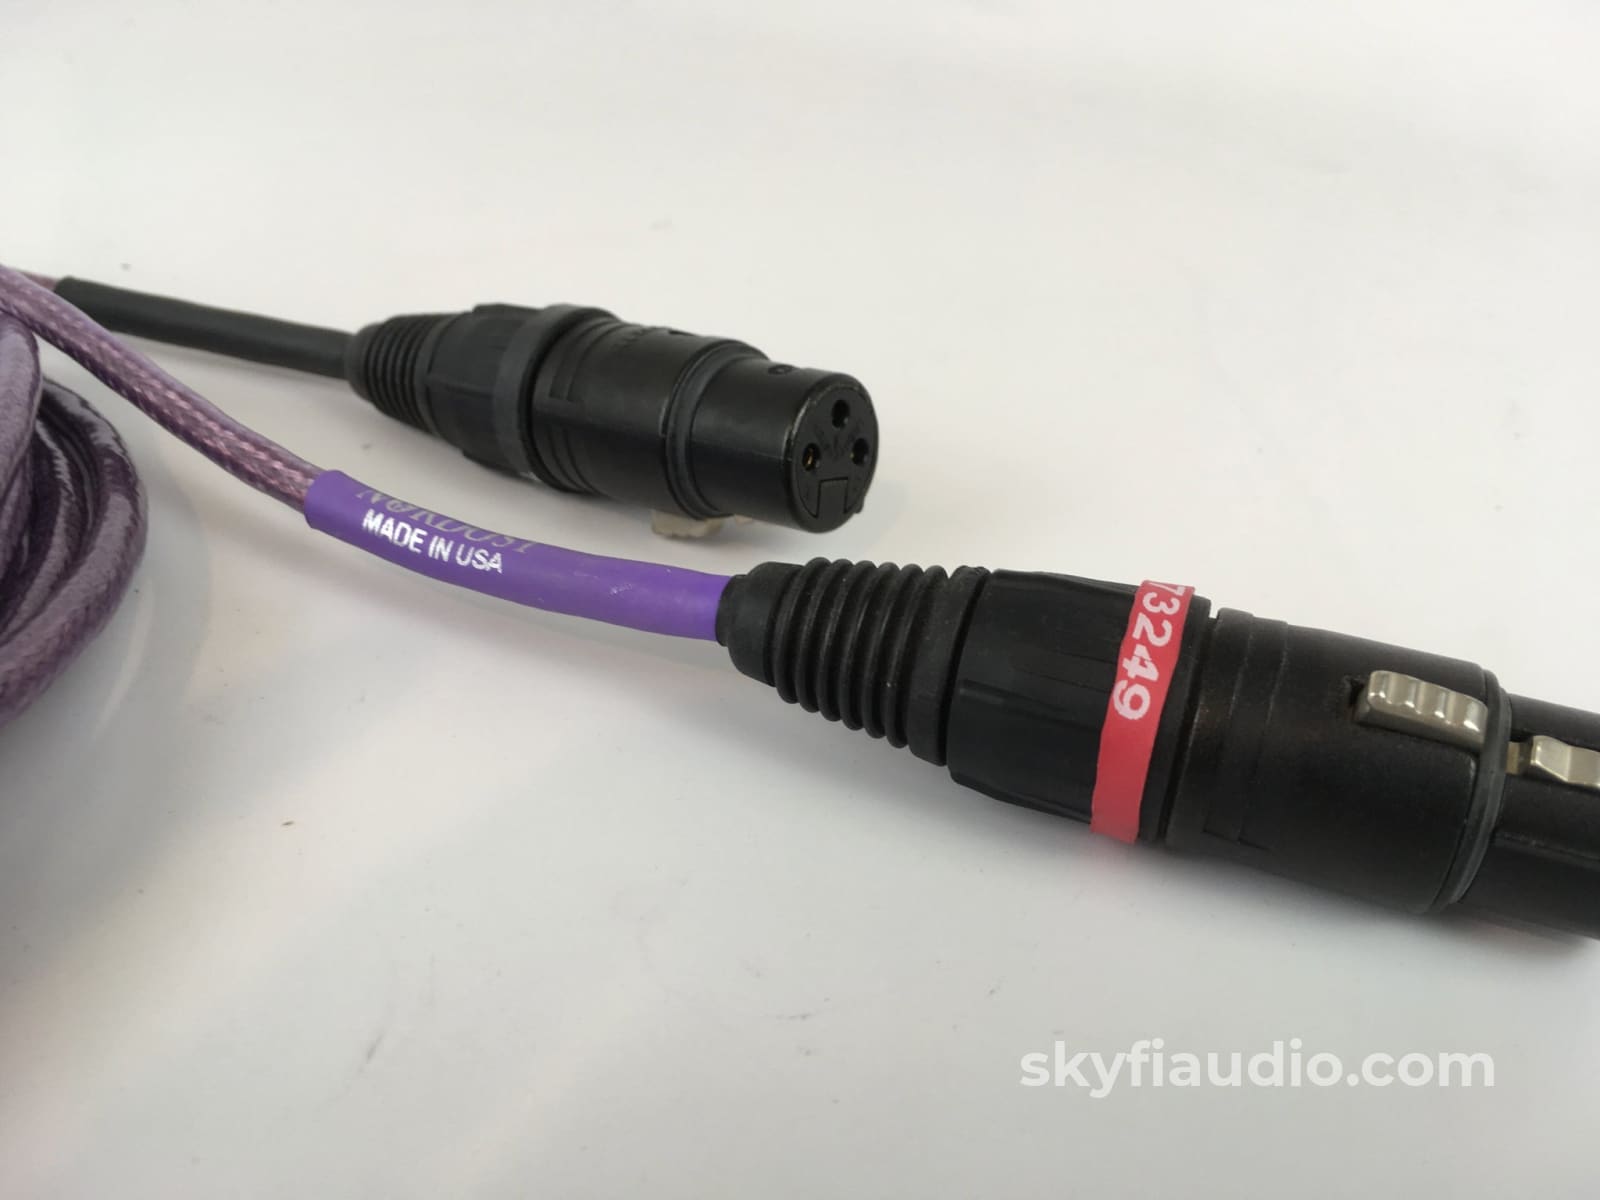 Nordost Frey Xlr Audio Cables - 2M